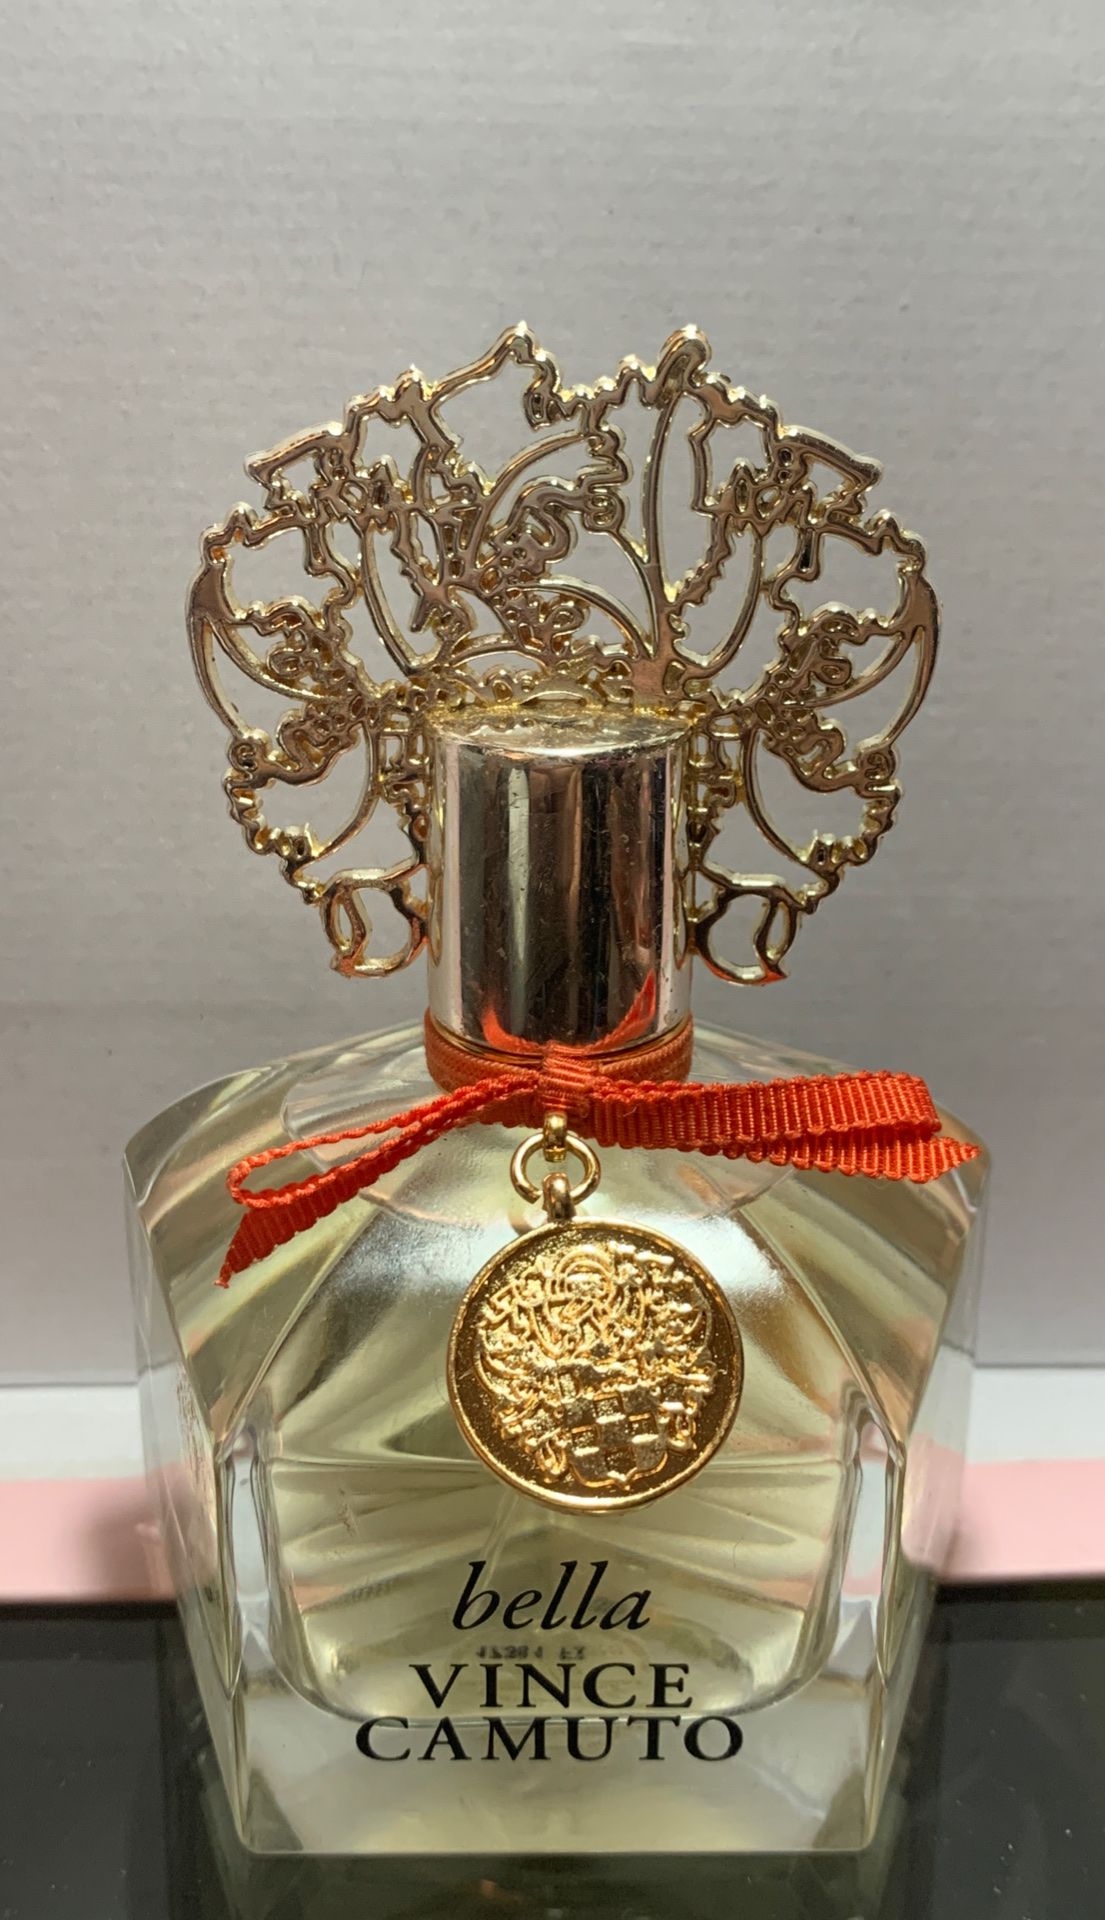 Bella Vince Camuto perfume 3.4 oz